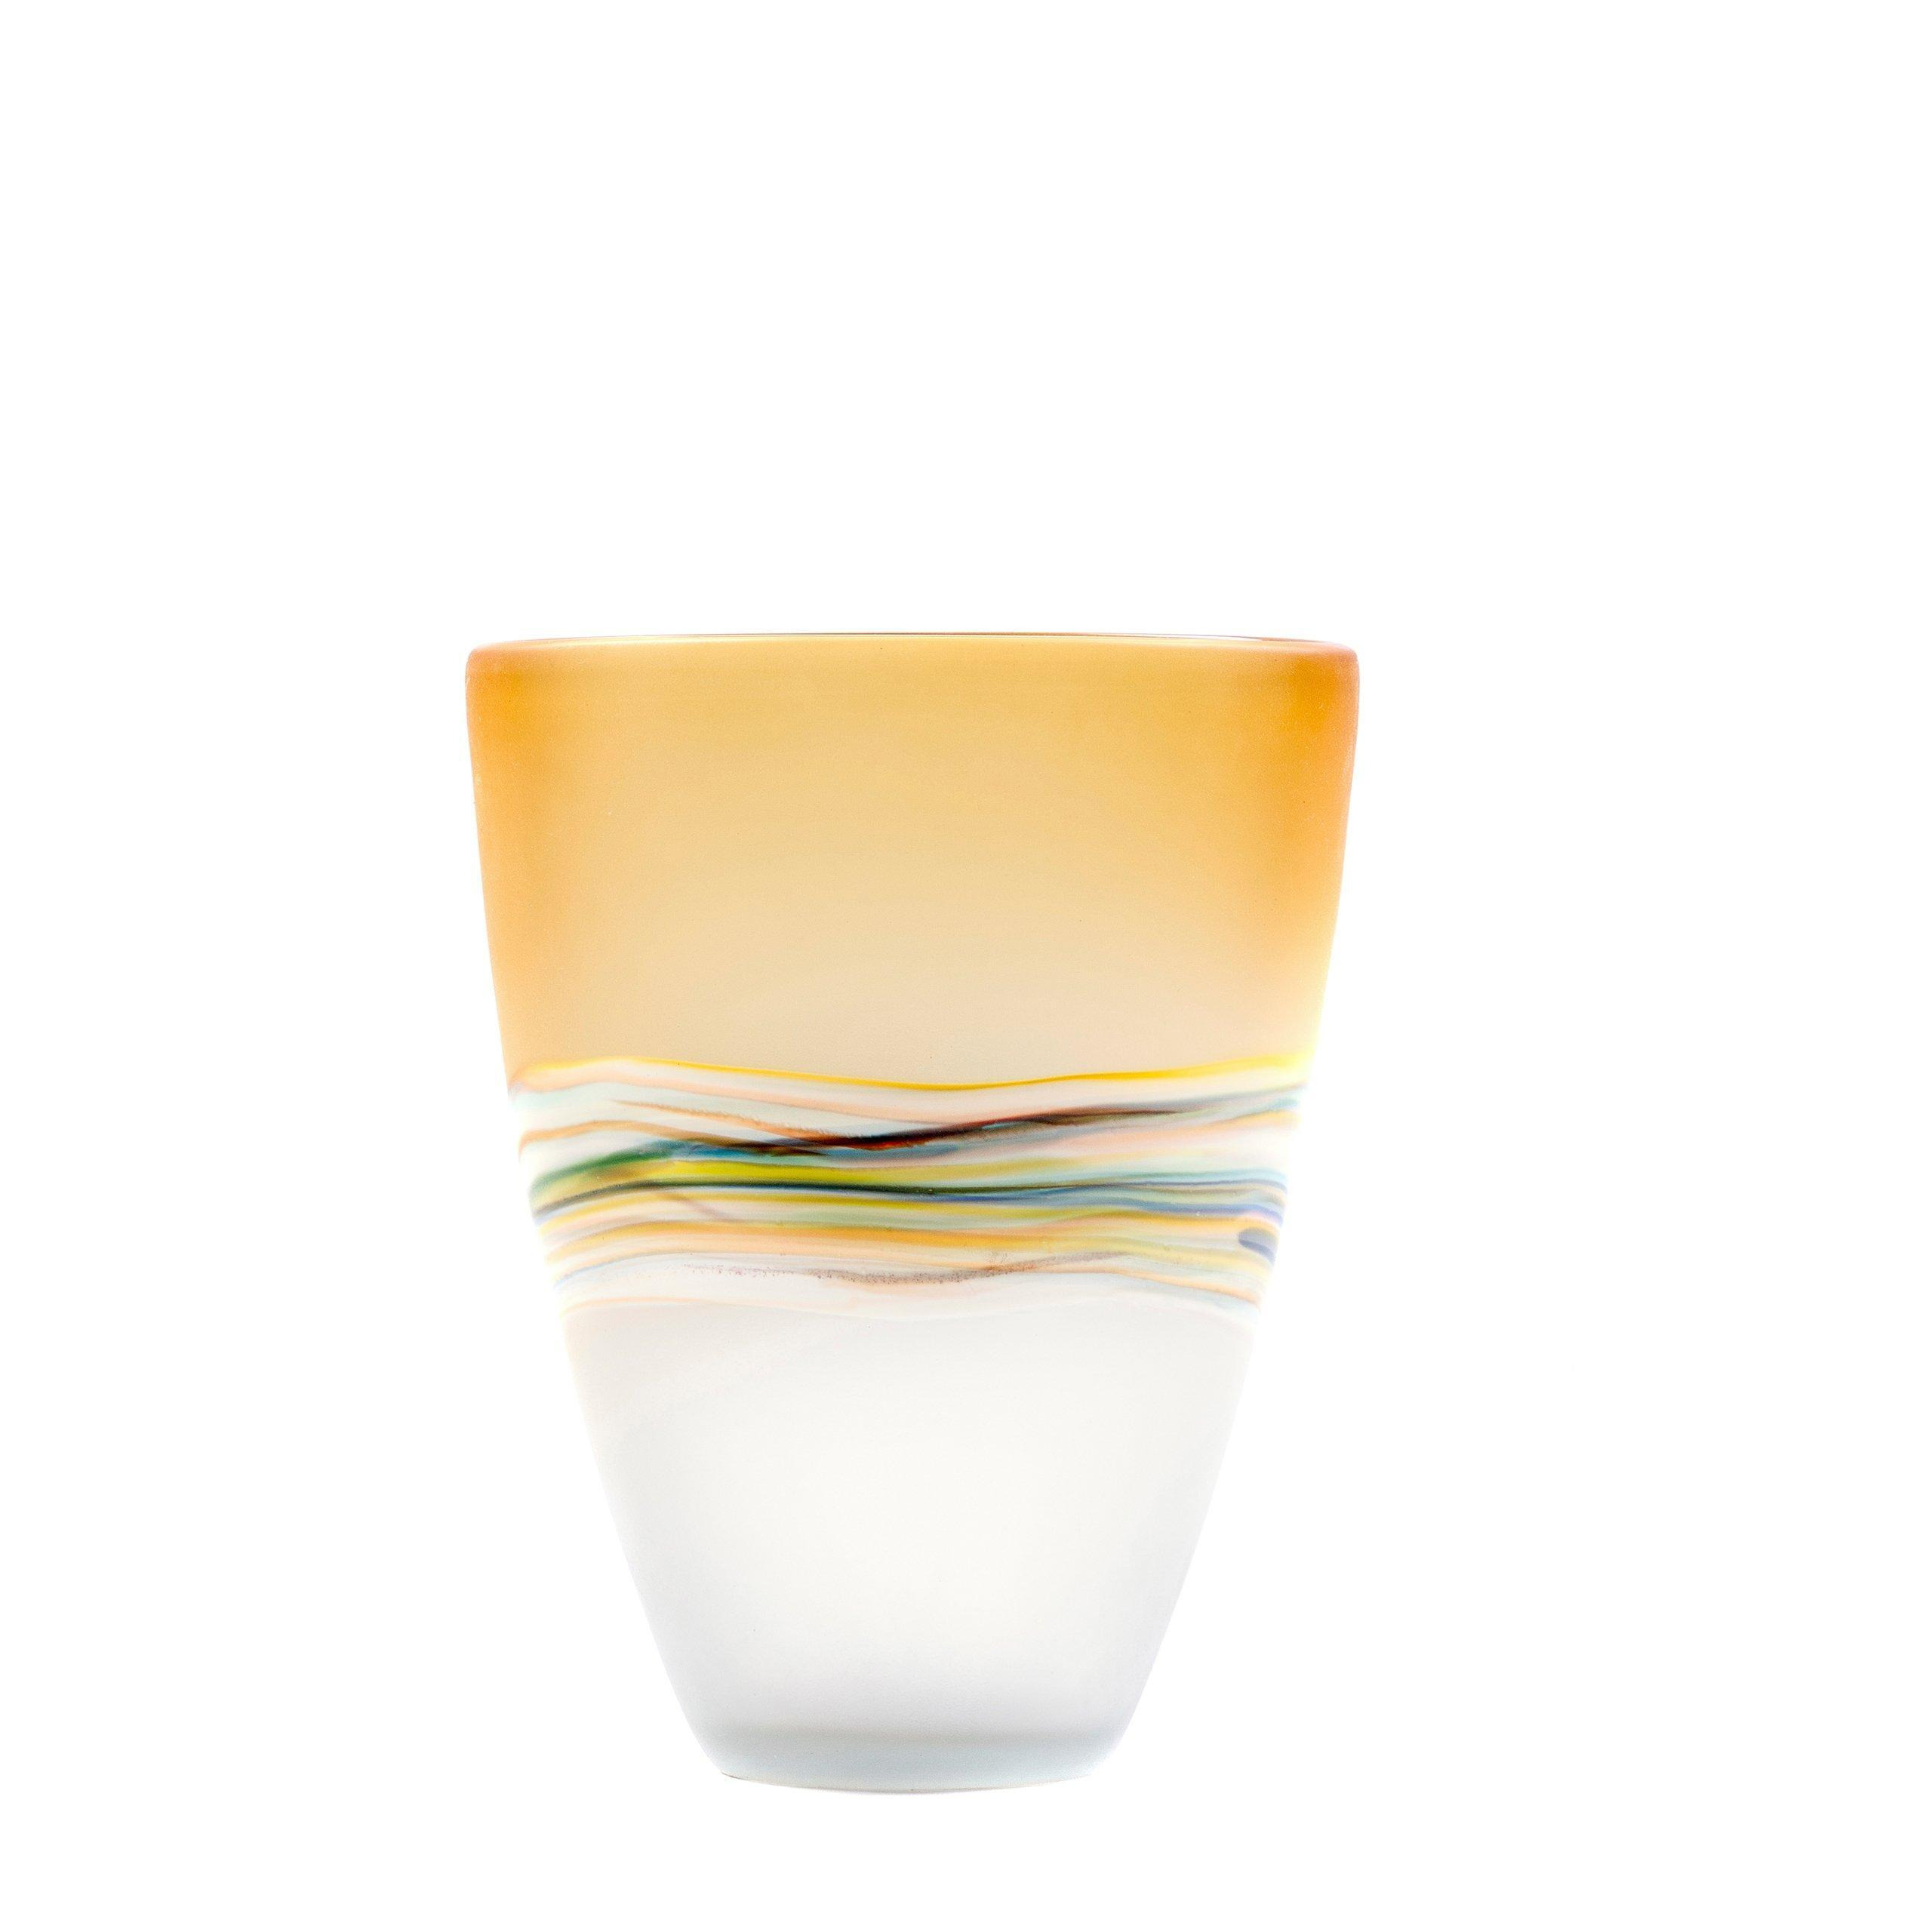 Marcellus Hand-Blown Glass Vase - image 1